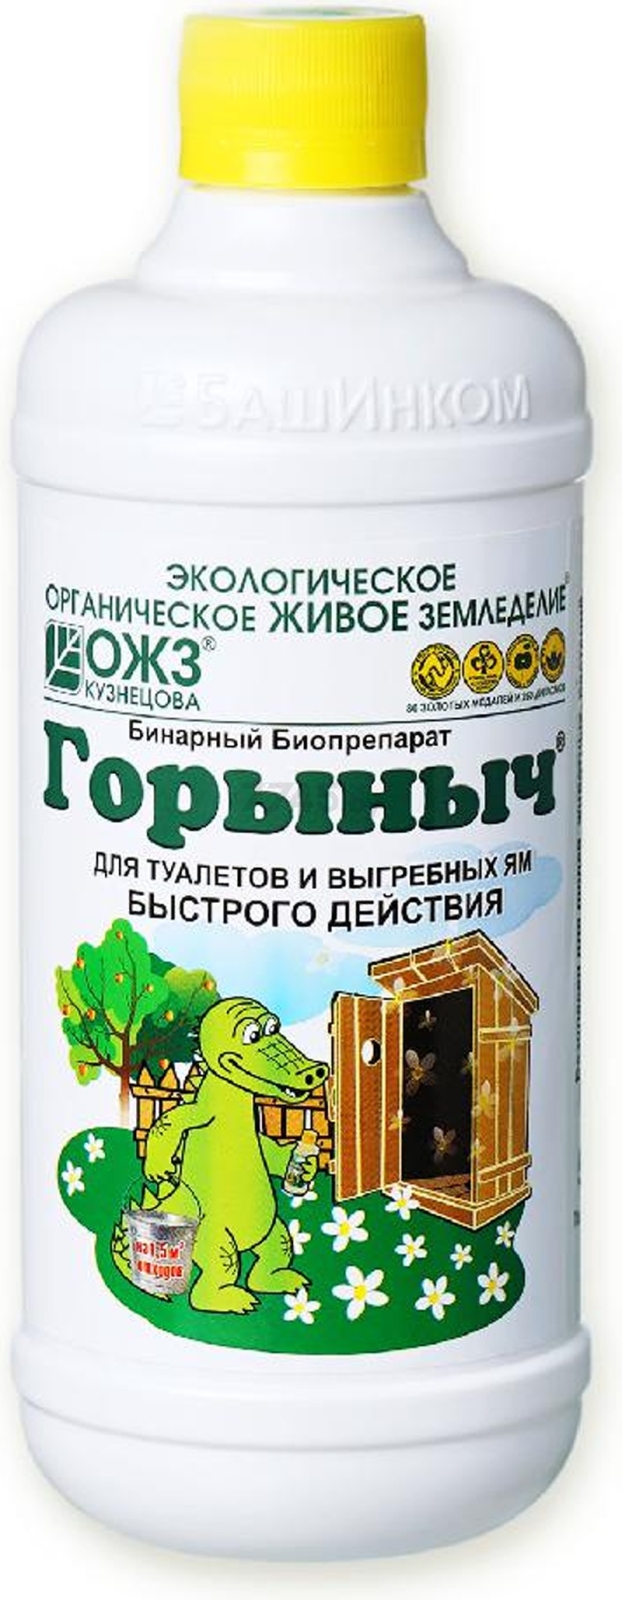 Бинарный биопрепарат для туалетов ГОРЫНЫЧ 0,5 л